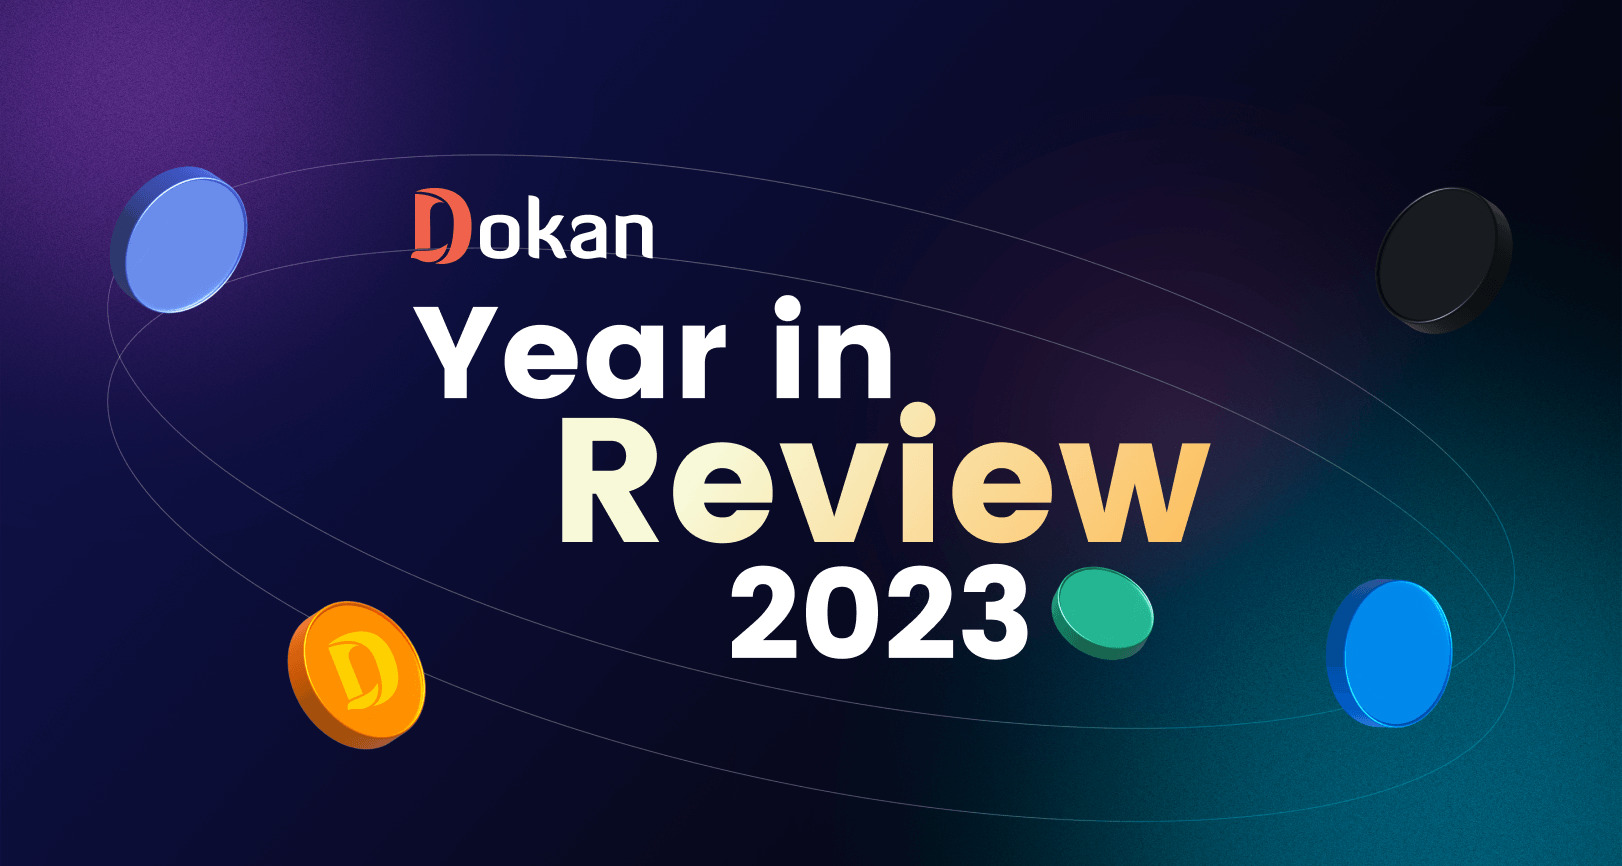 Dokan Year in Review 2023